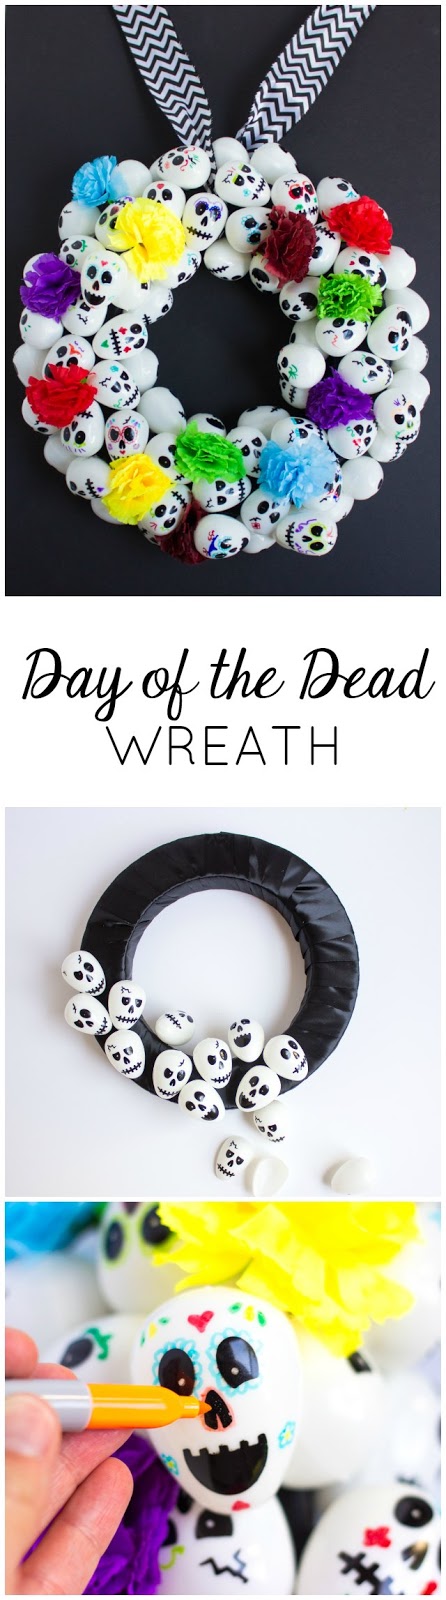 Make a Day of the Dead (Dia de los Muertos) wreath with plastic skull eggs!